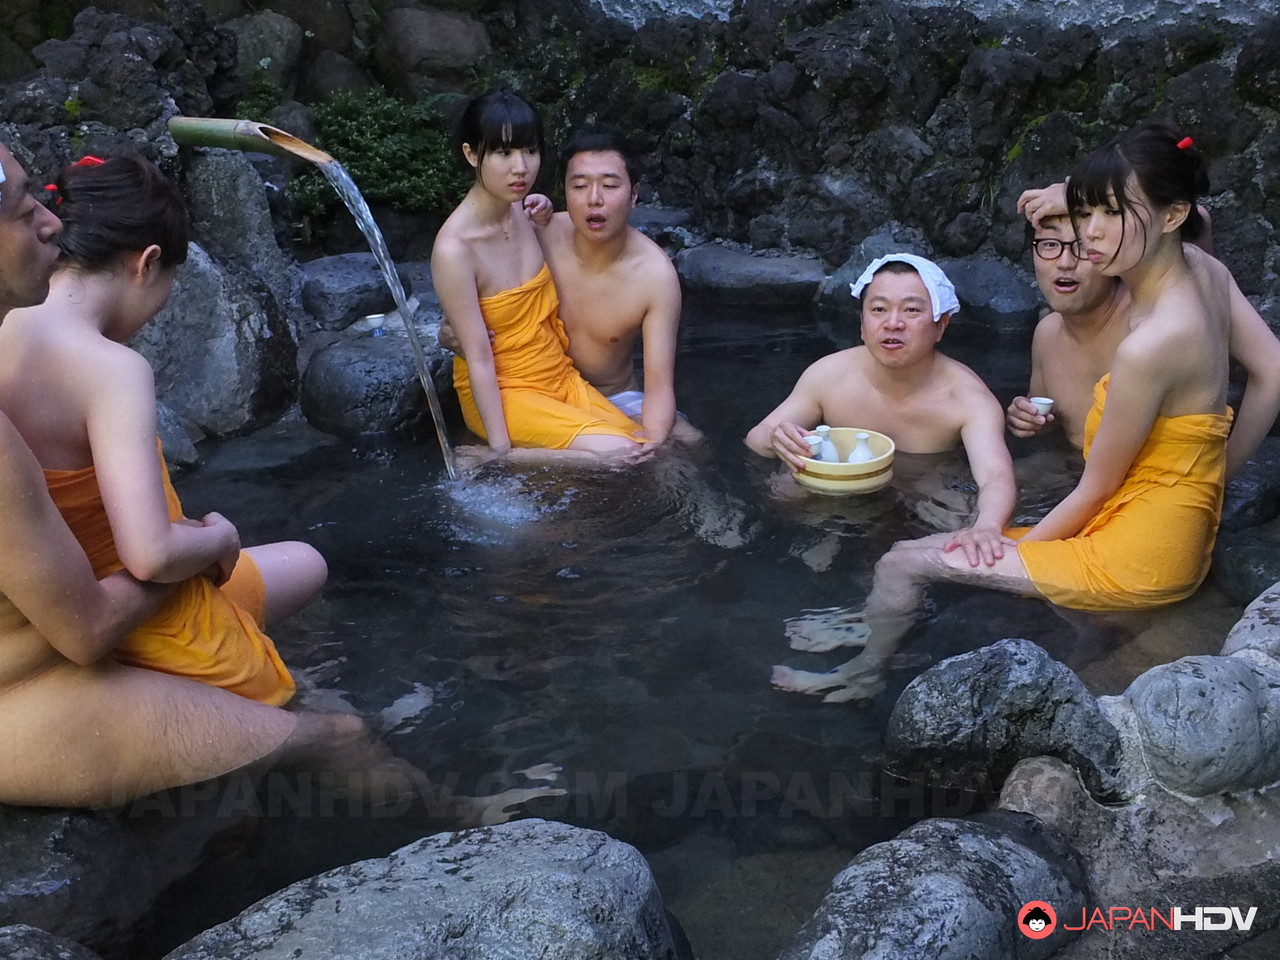 Three Japanese virgins get involved in an Asian orgy at the spa porno fotky #428331197 | Japan HDV Pics, Jyuri Ayase, Nozomi Koizumi, Yuuko Kohinata, Japanese, mobilní porno